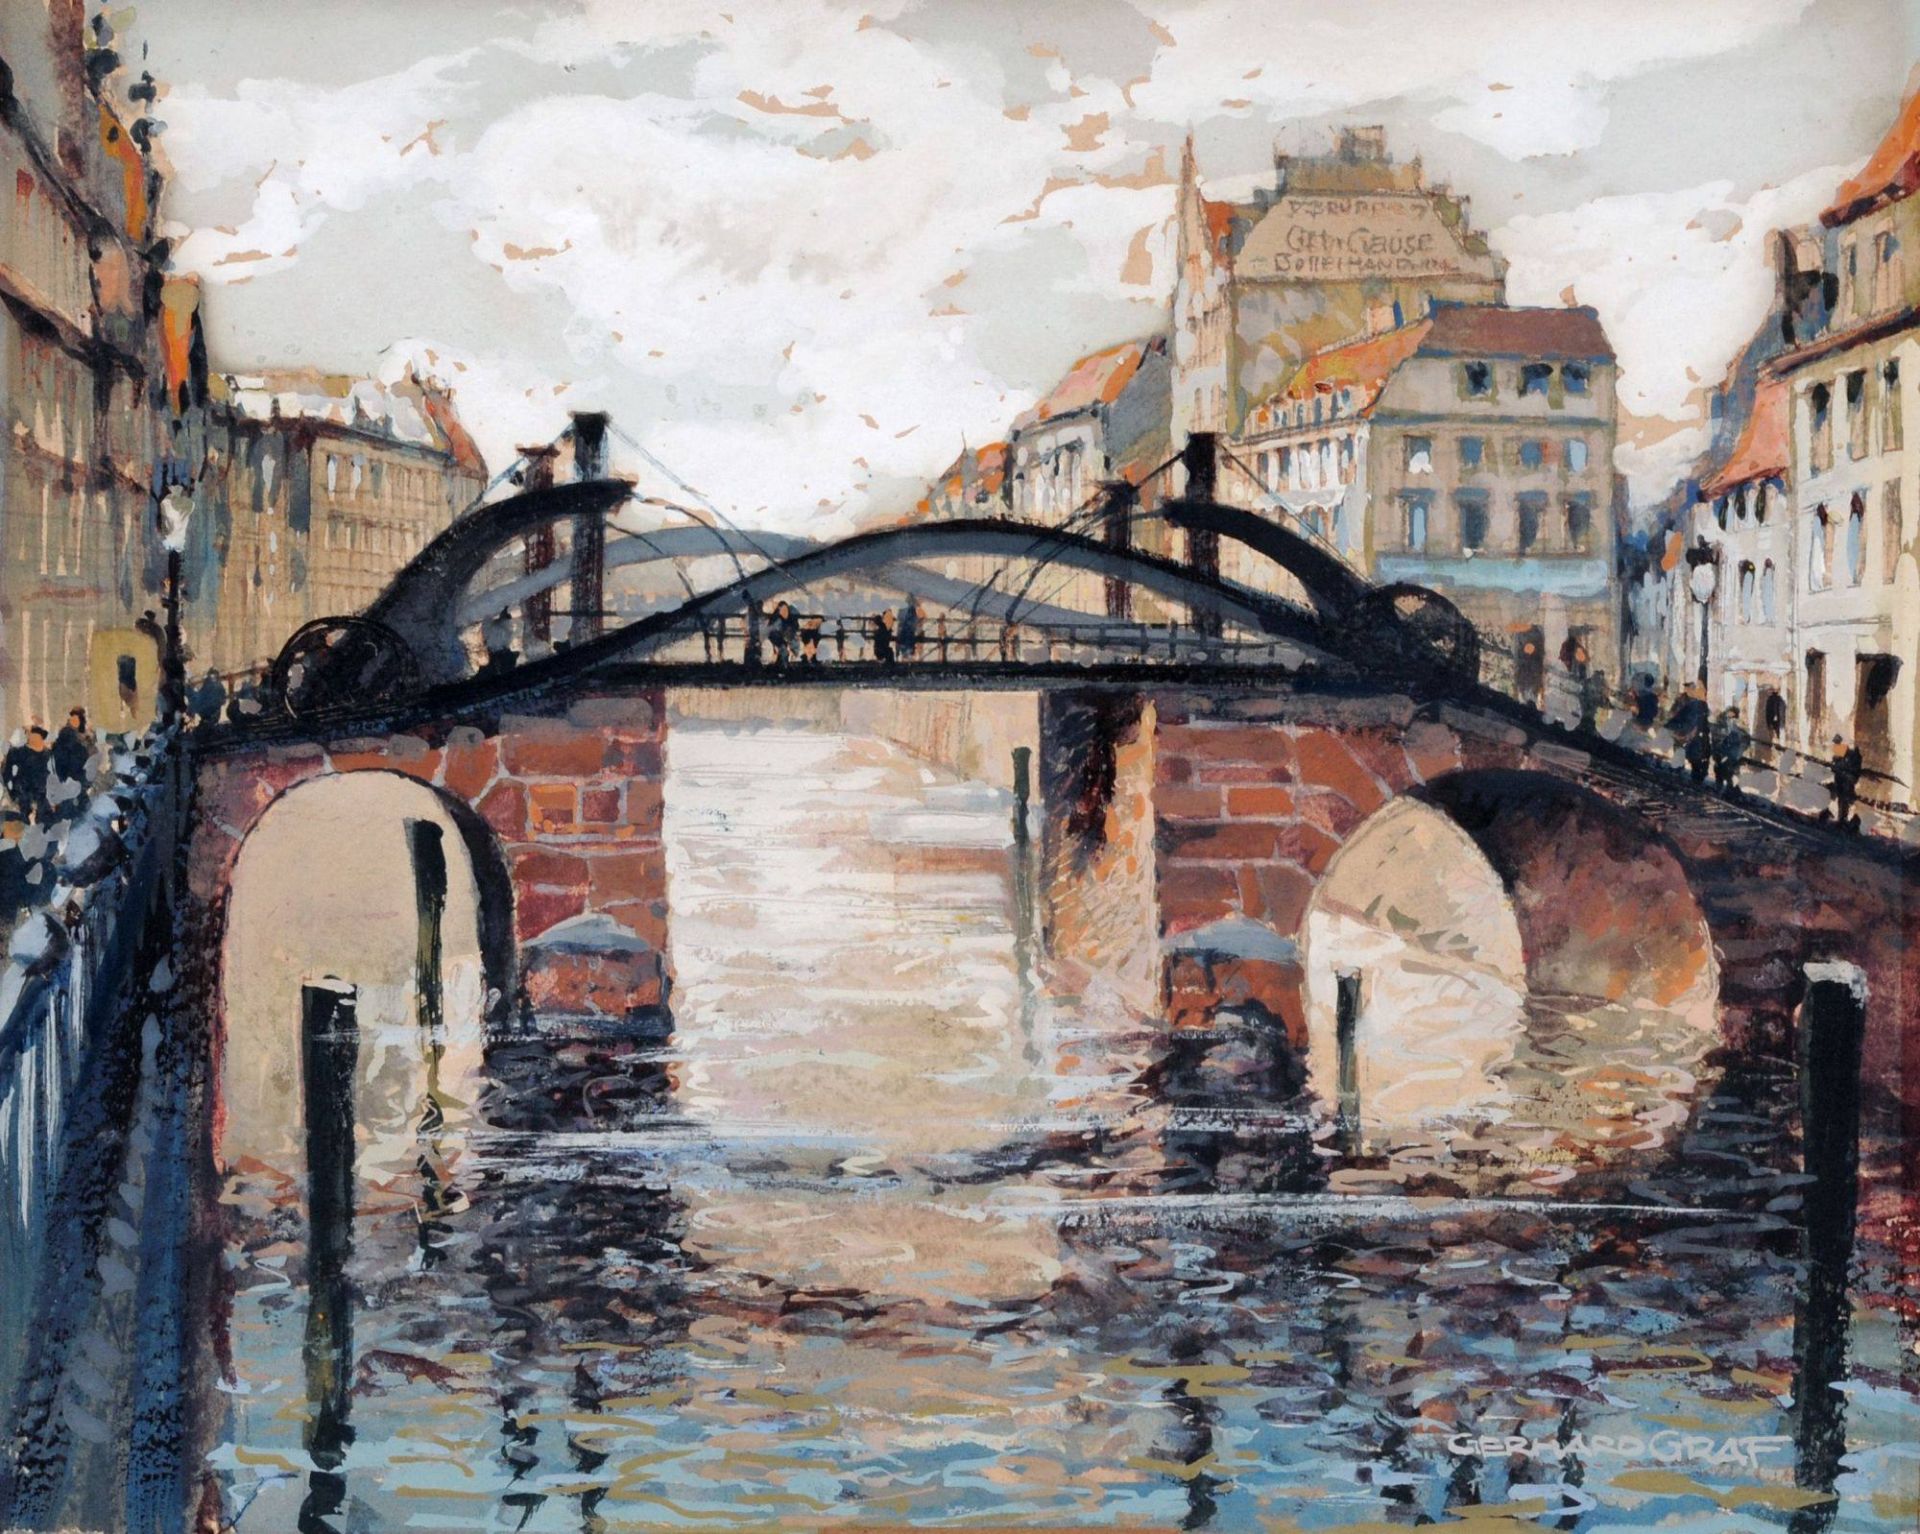 Gerhard Graf, Berlin  Blick auf die Jungfernbrücke. Wohl um 1930.